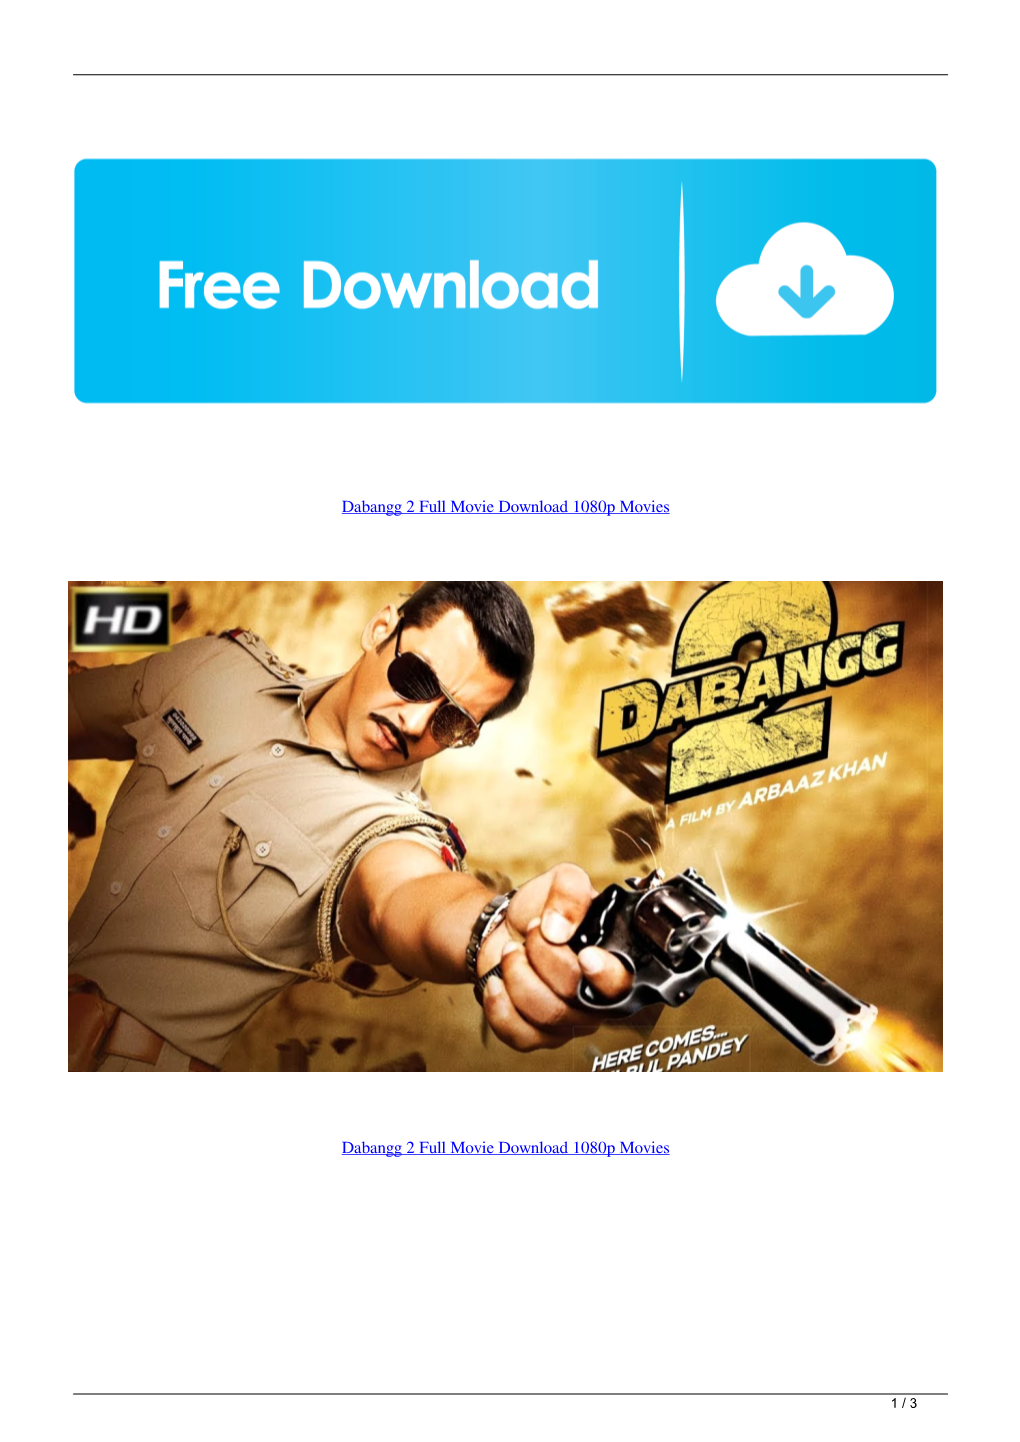 Dabangg 2 Full Movie Download 1080P Movies